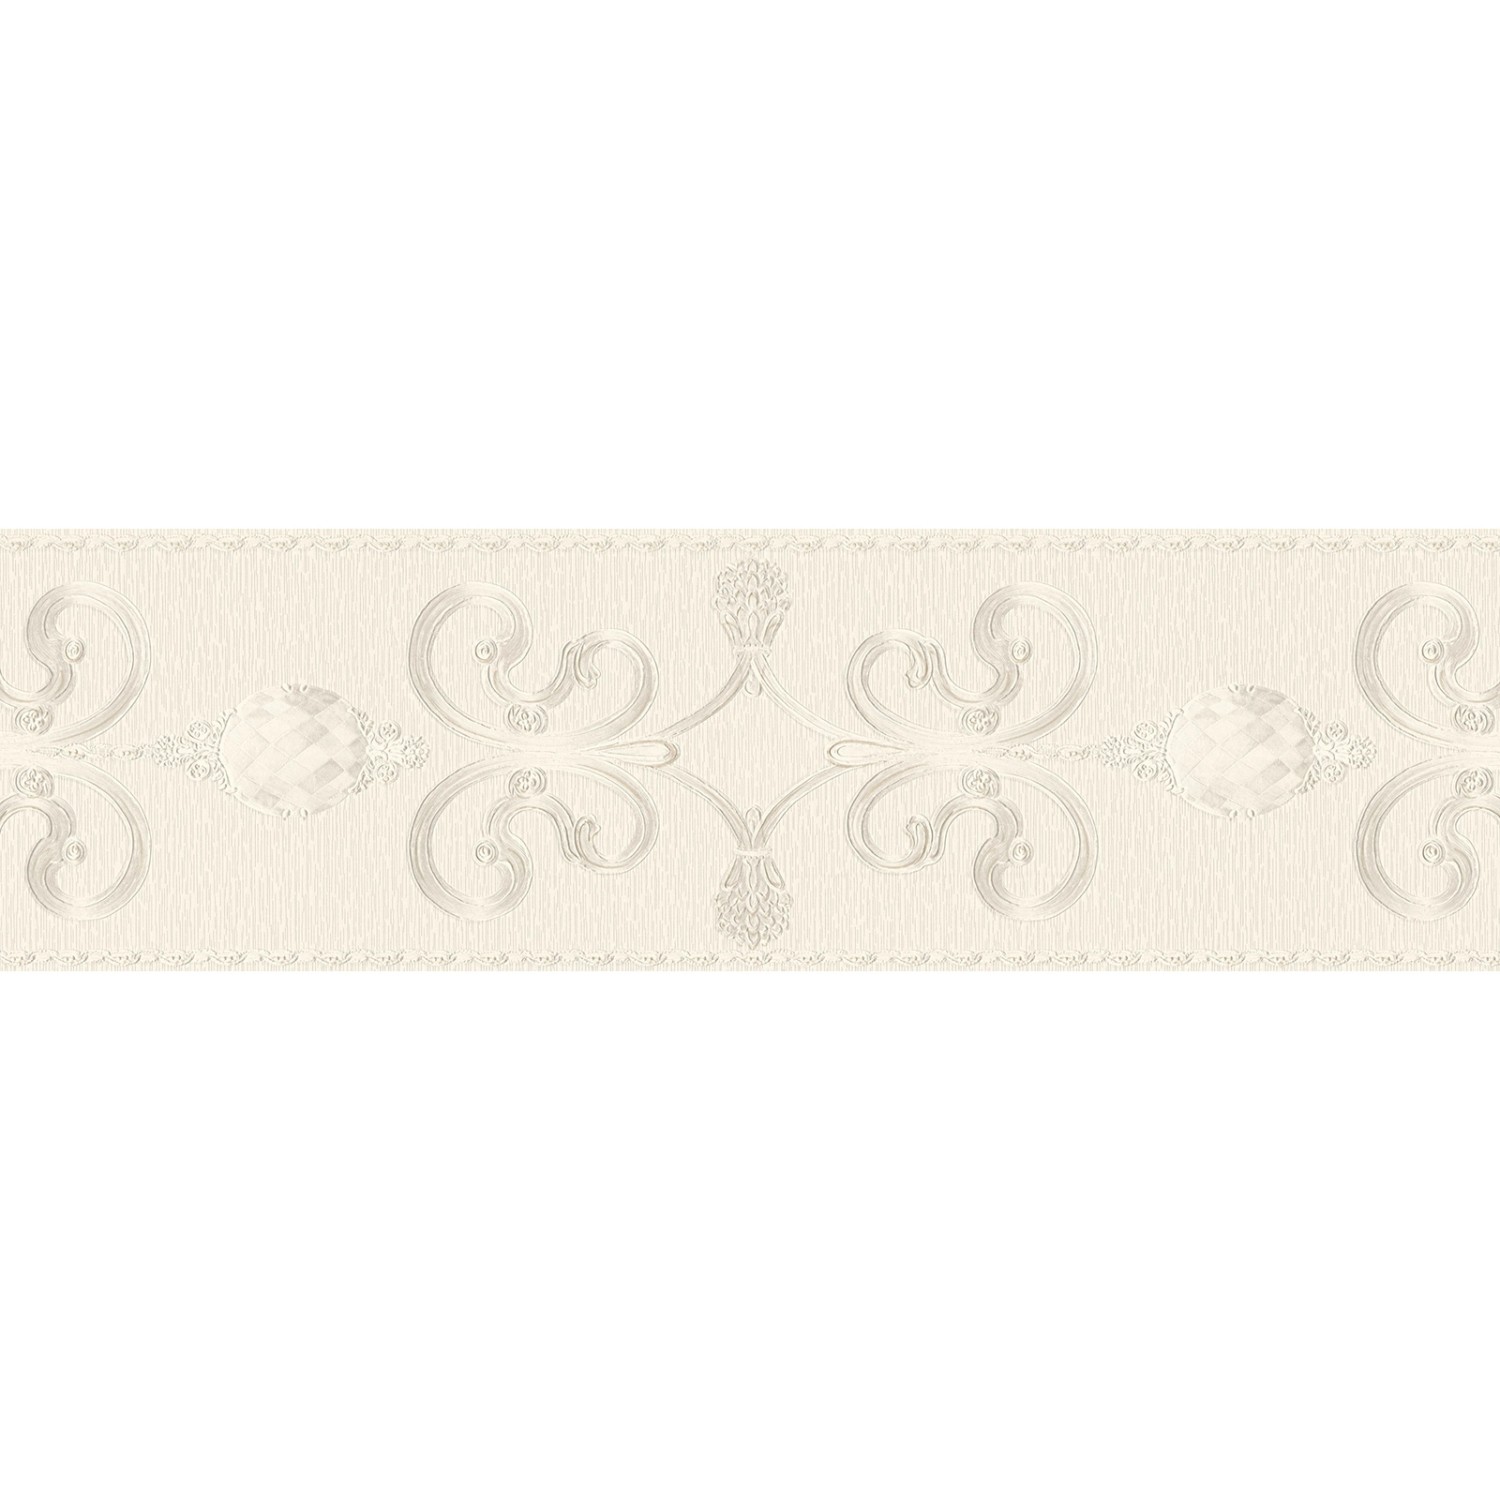 Bricoflor Selbstklebende Tapeten Bordüre im Barock Stil Neobarock Tapetenbordüre mit Ornament in Creme Weiß Glitzer Tape